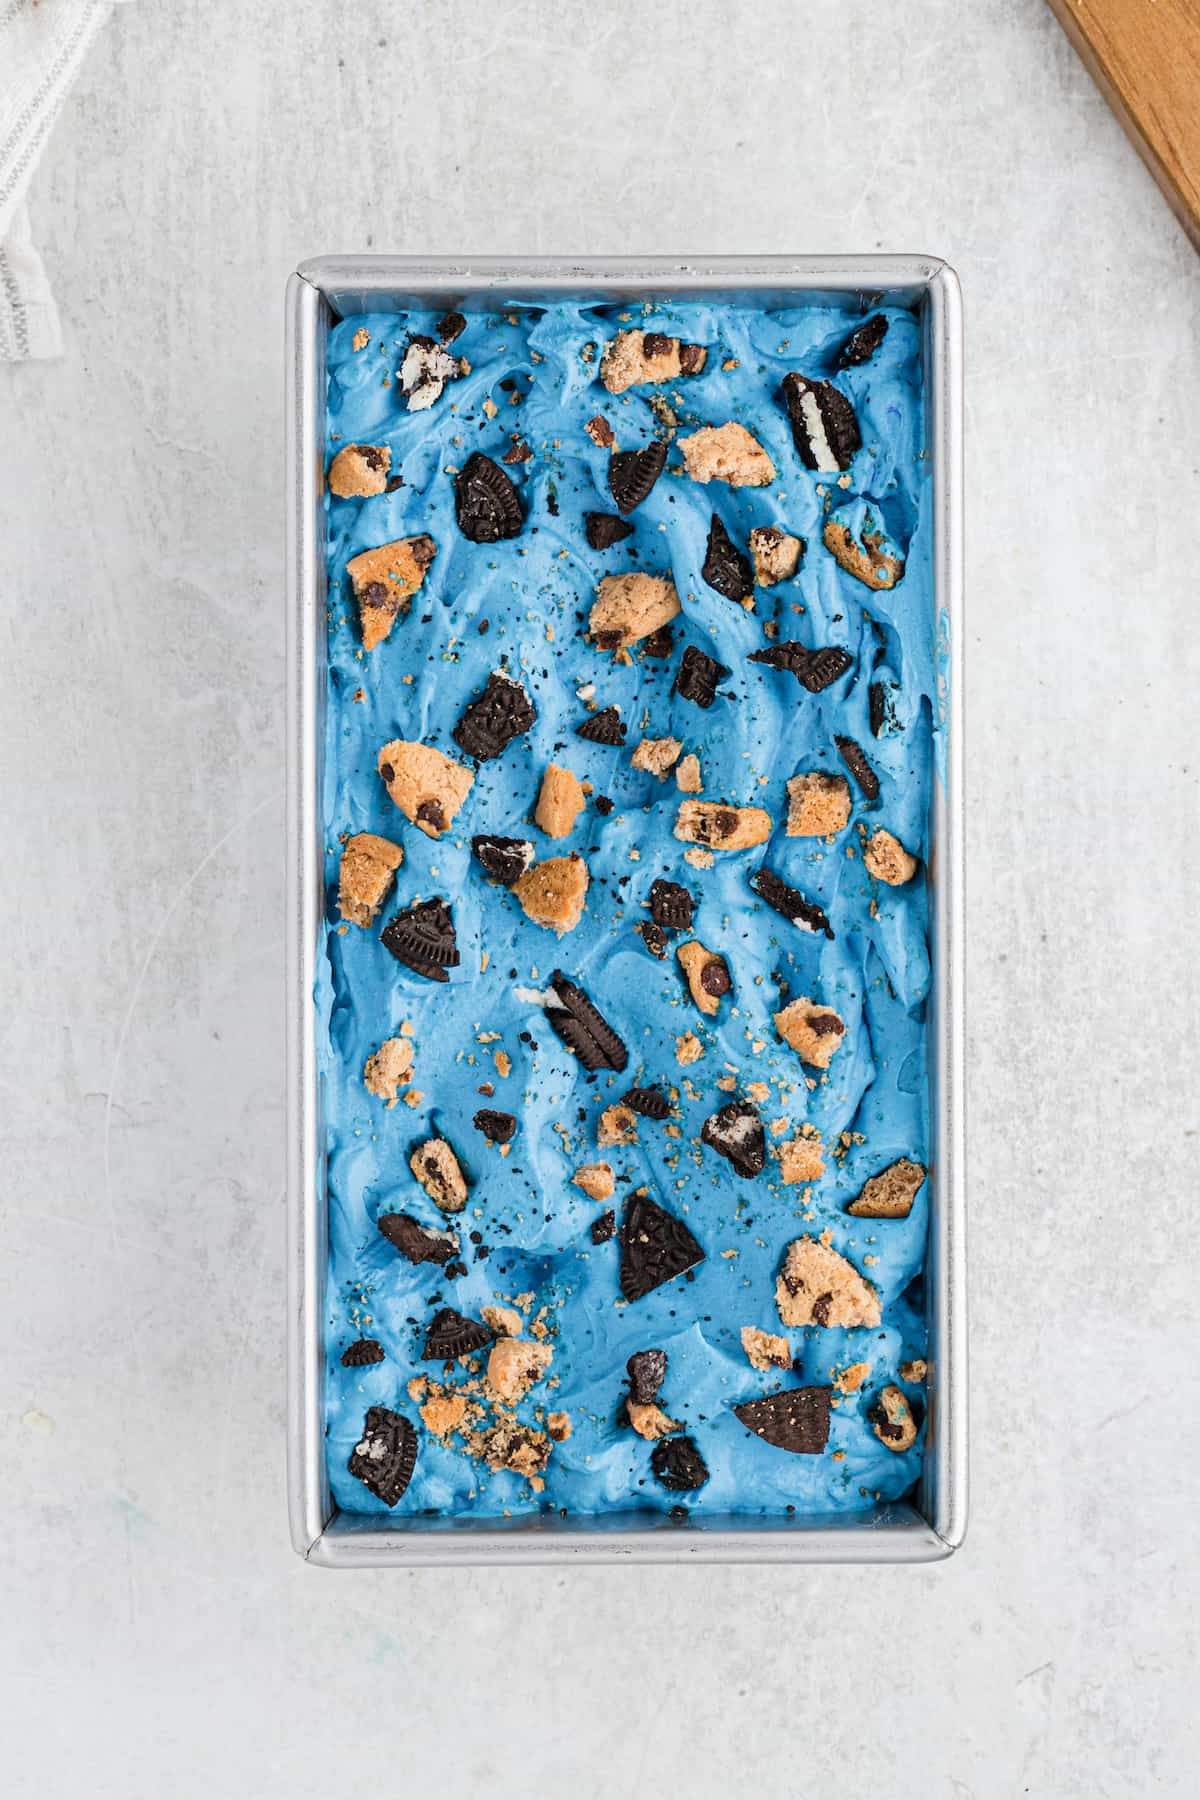 Cookie Monster Ice Cream frozen in loaf pan